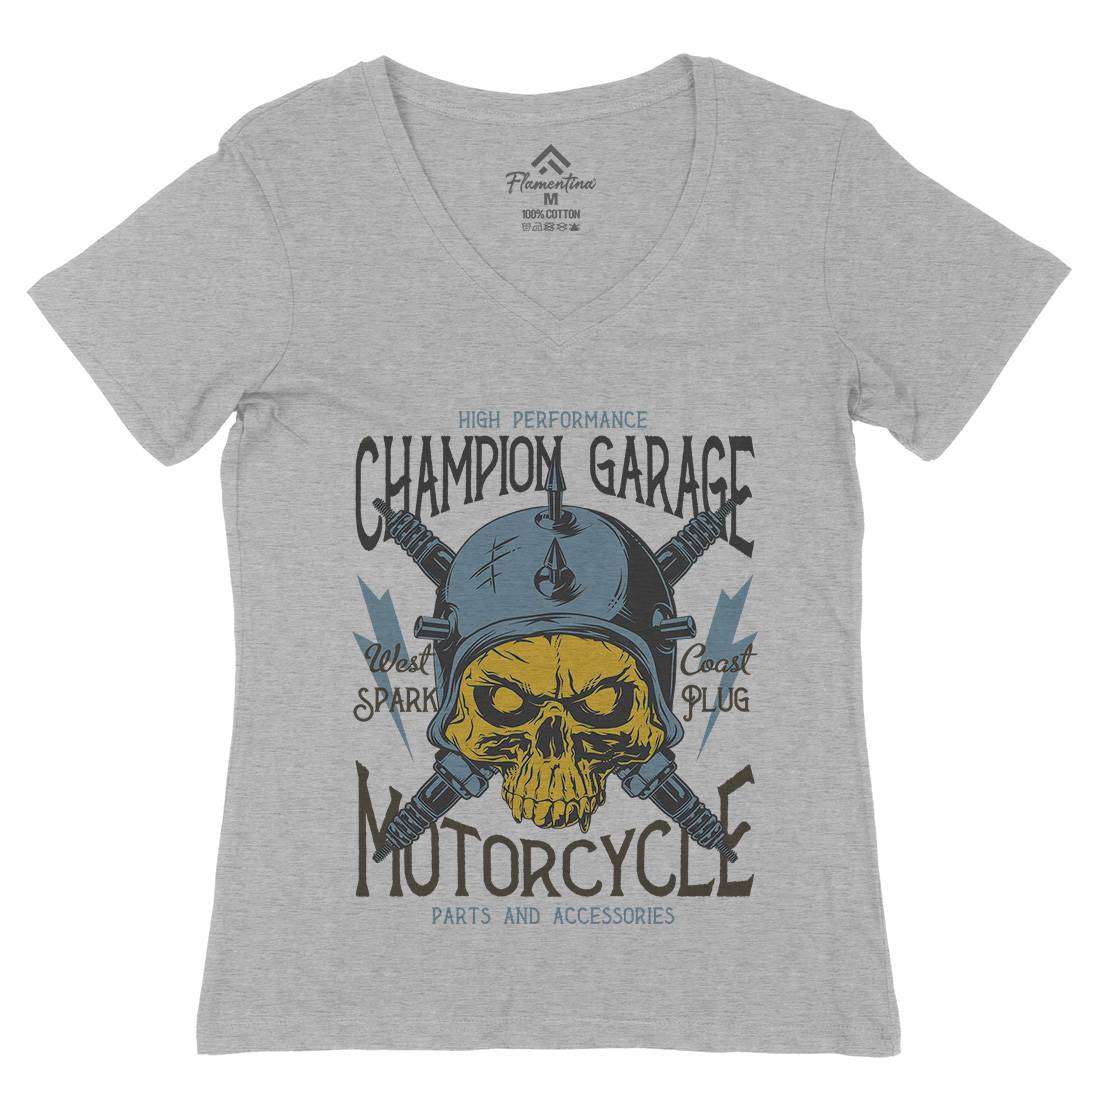 Champion Garage Womens Organic V-Neck T-Shirt Motorcycles D917